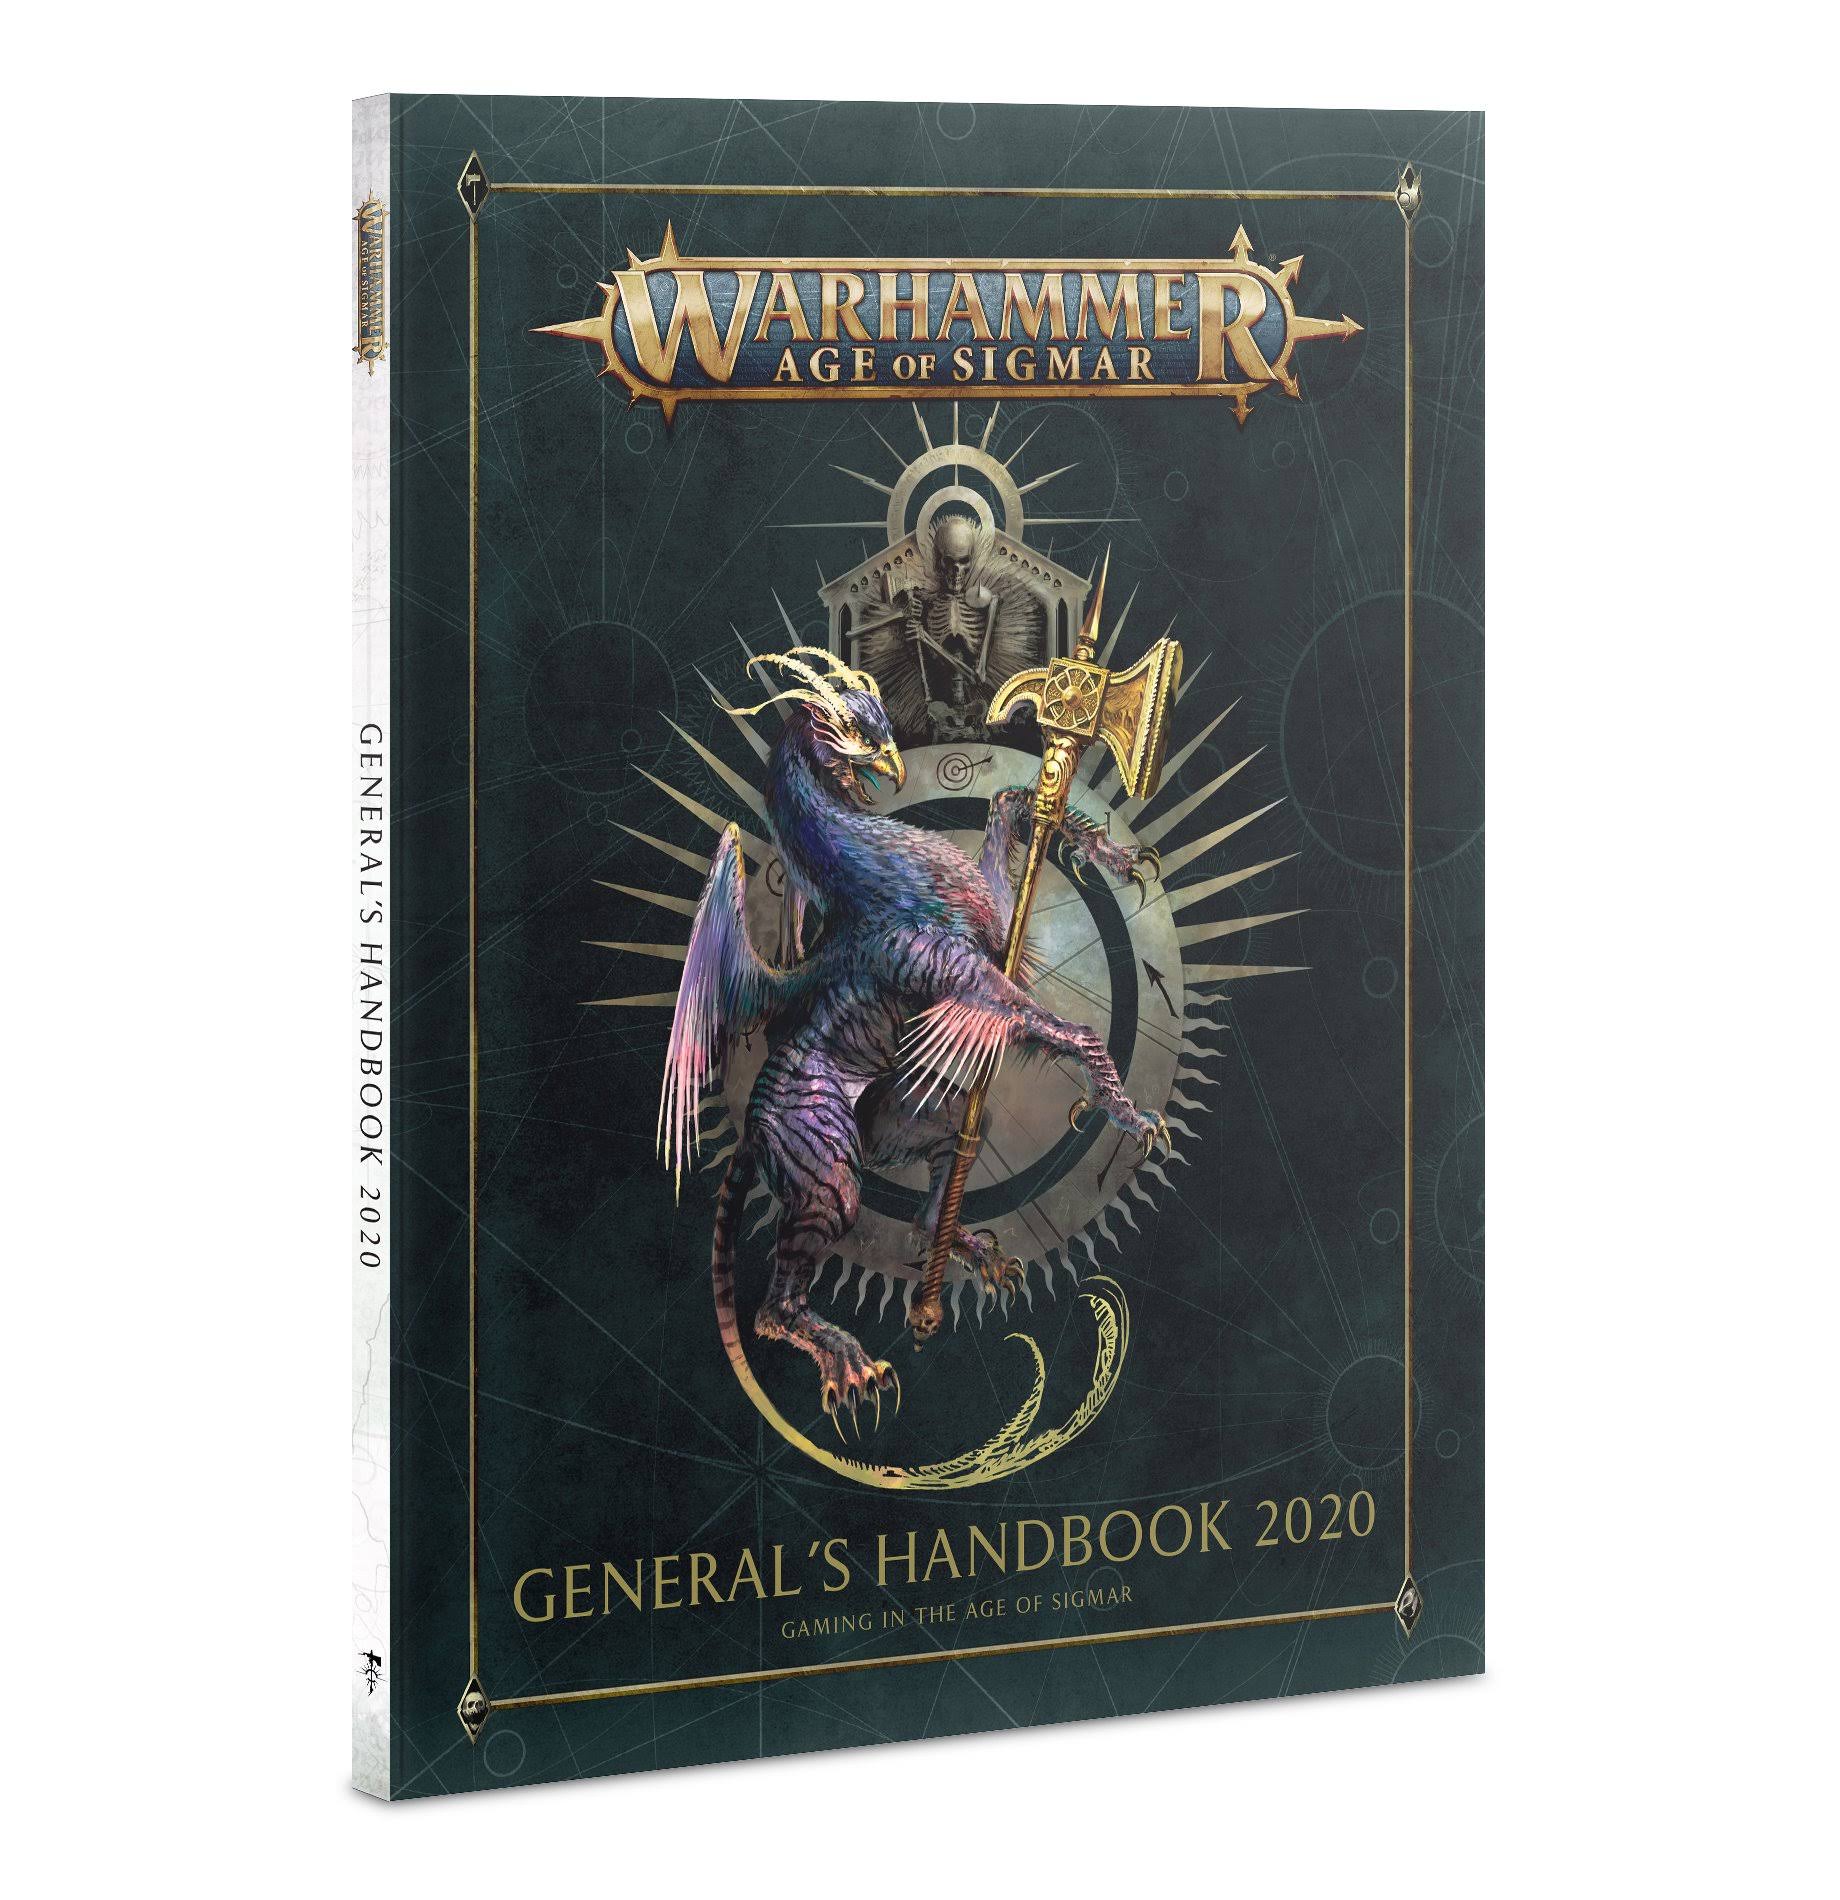 Warhammer Age of Sigmar General's Handbook 2020